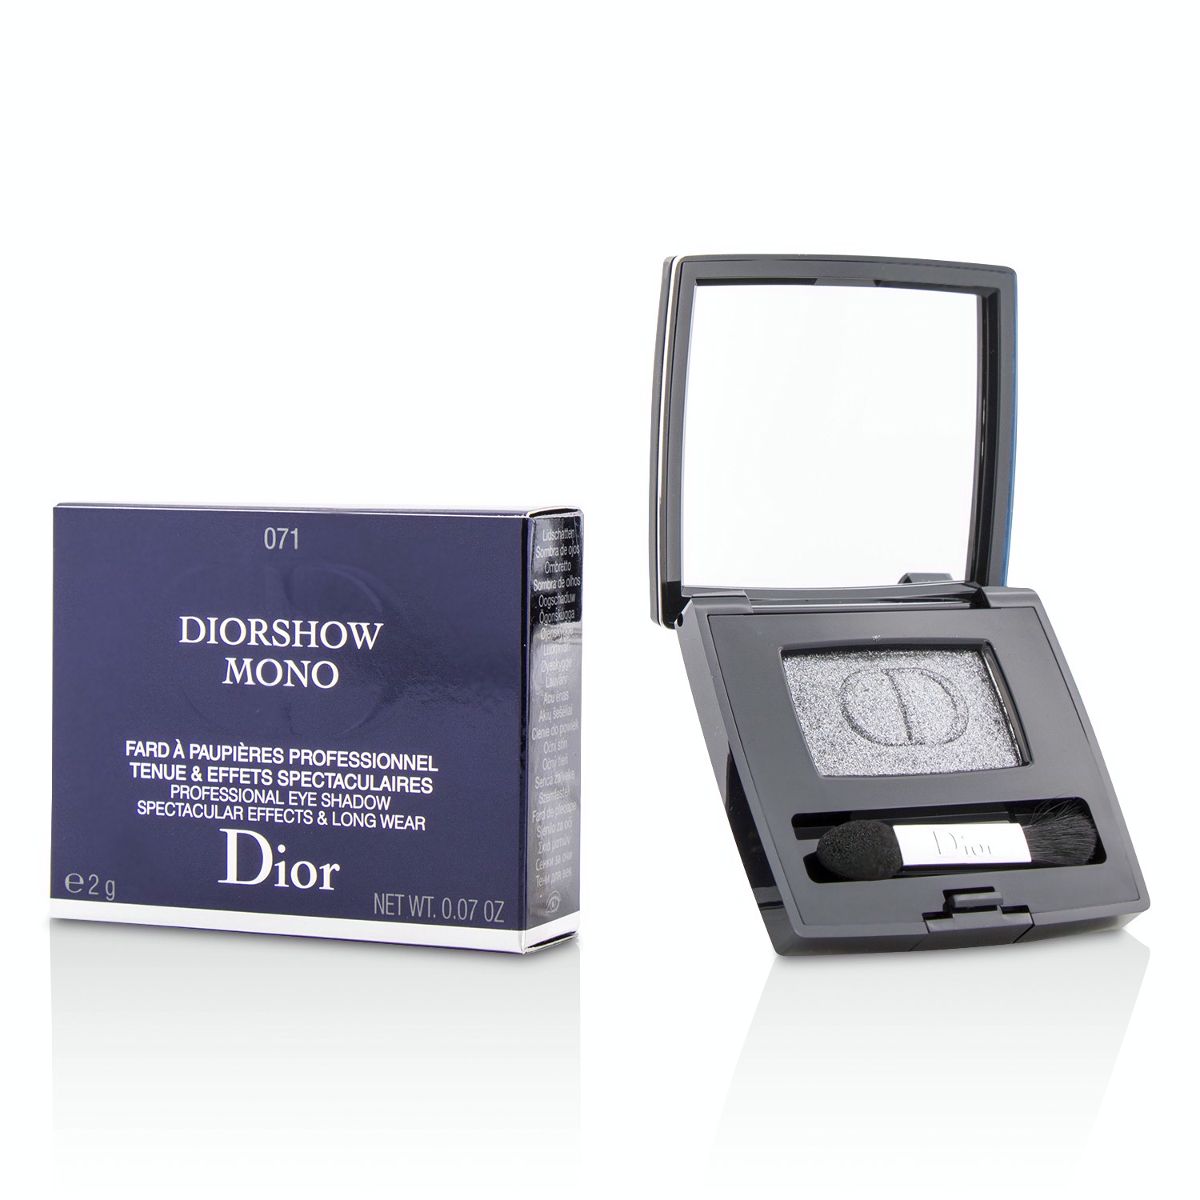 Diorshow Mono Professional Spectacular Effects  Long Wear Eyeshadow - # 071 Radical Christian Dior Image